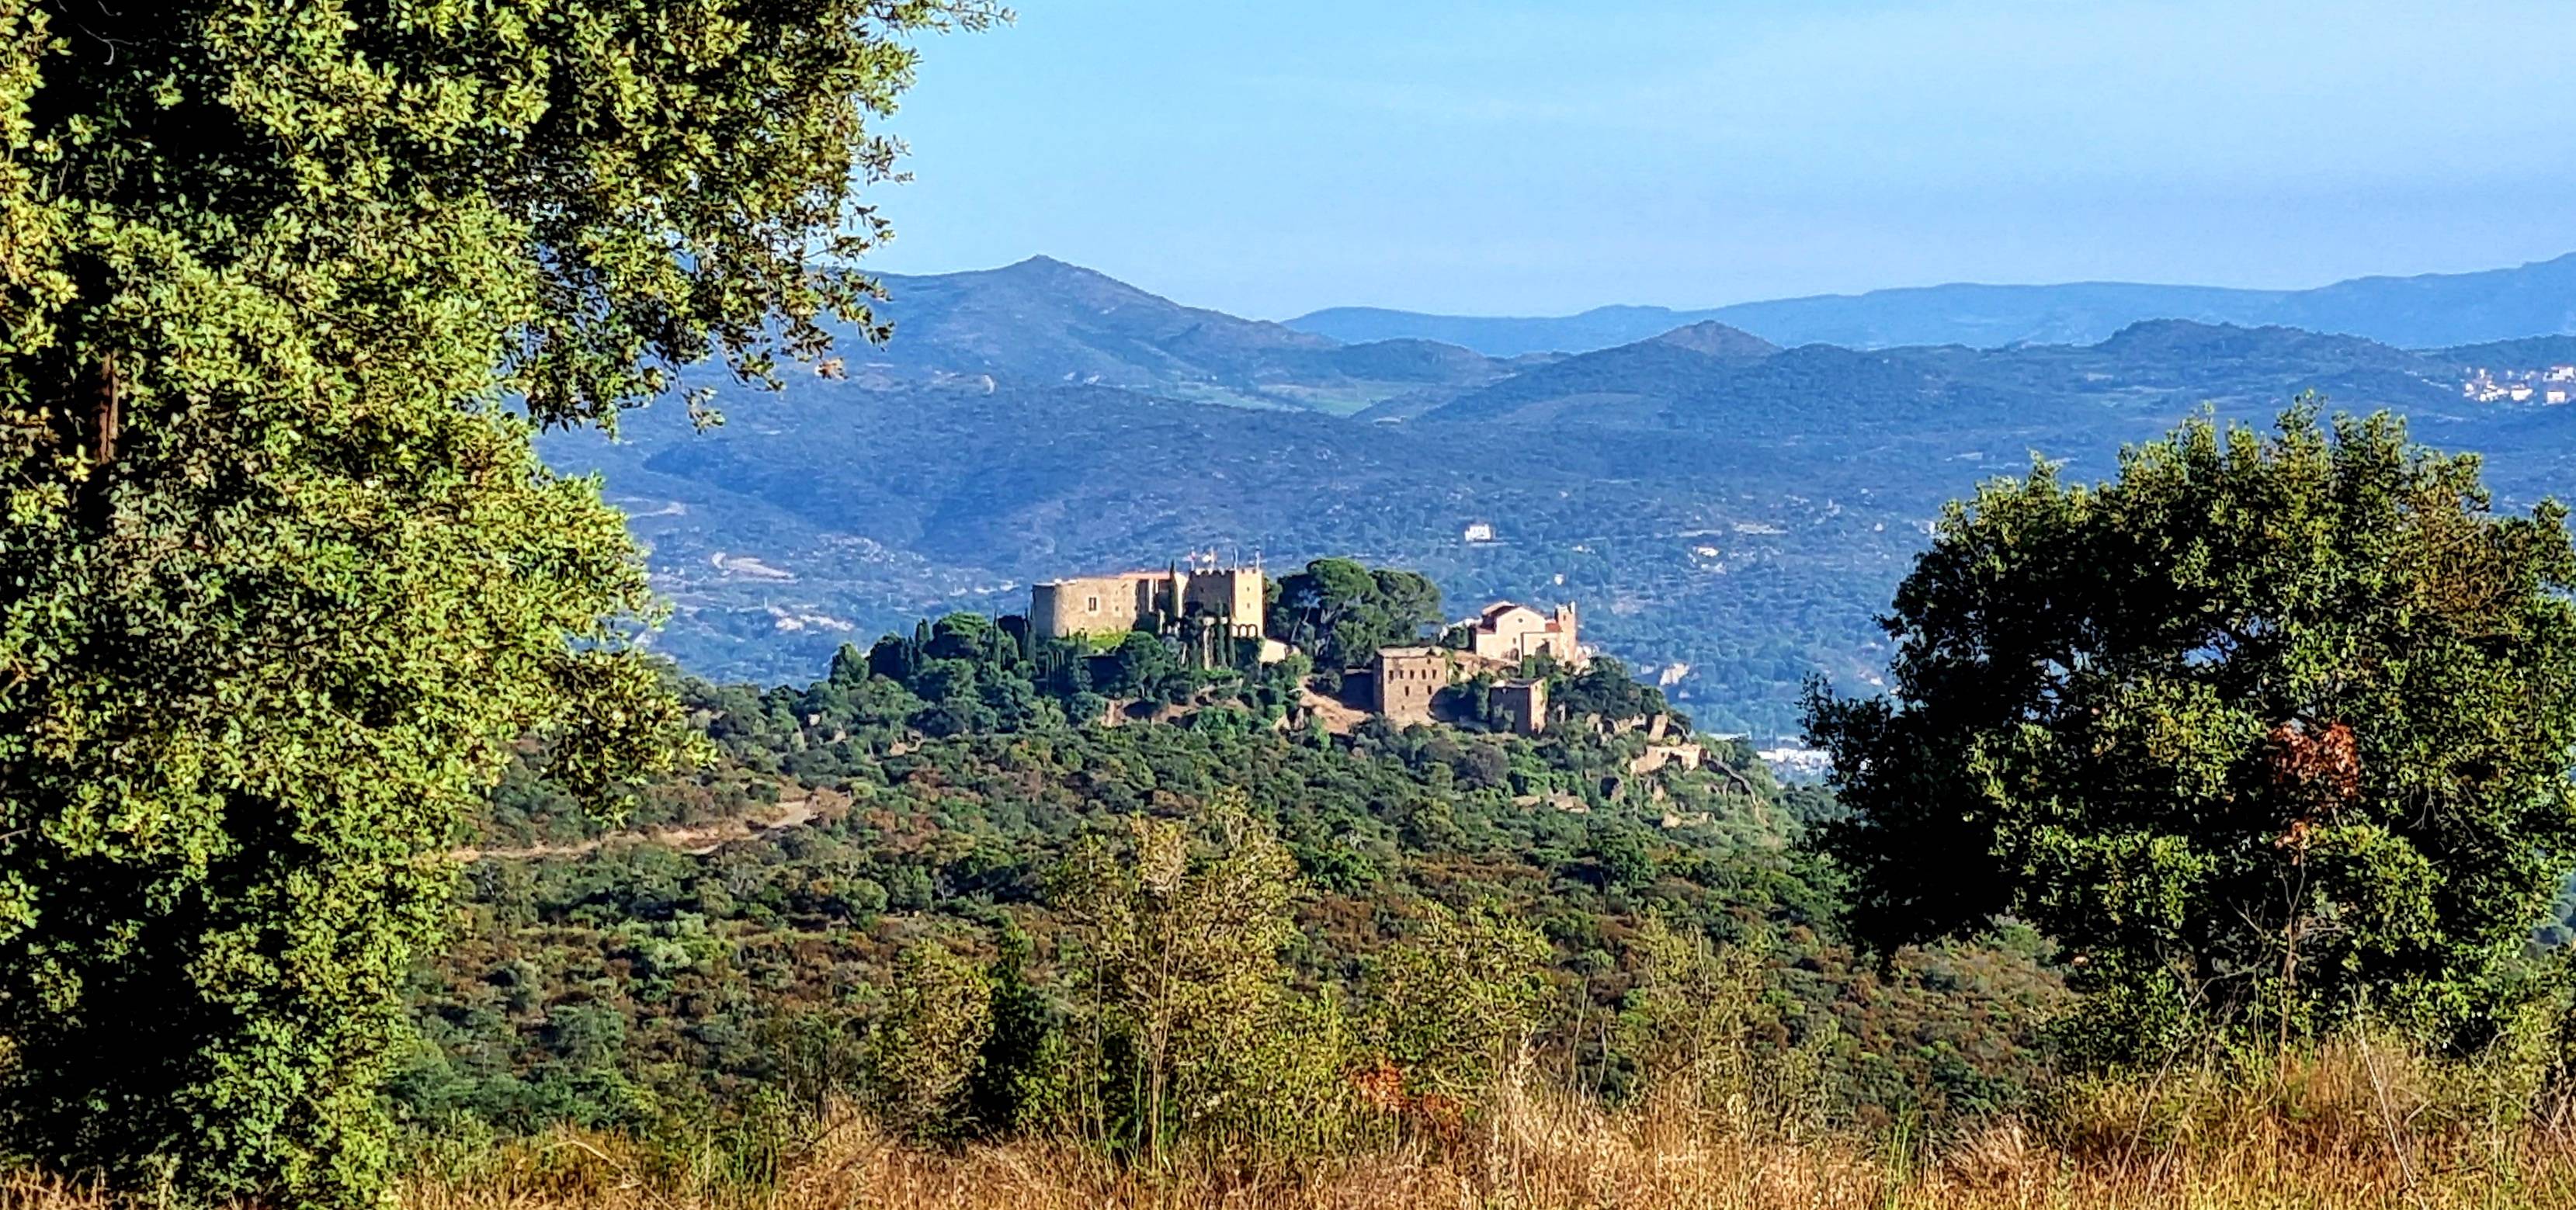 Picture from Area related to Puig de Boc, Castelnou, Montou shoot by Romano Serra